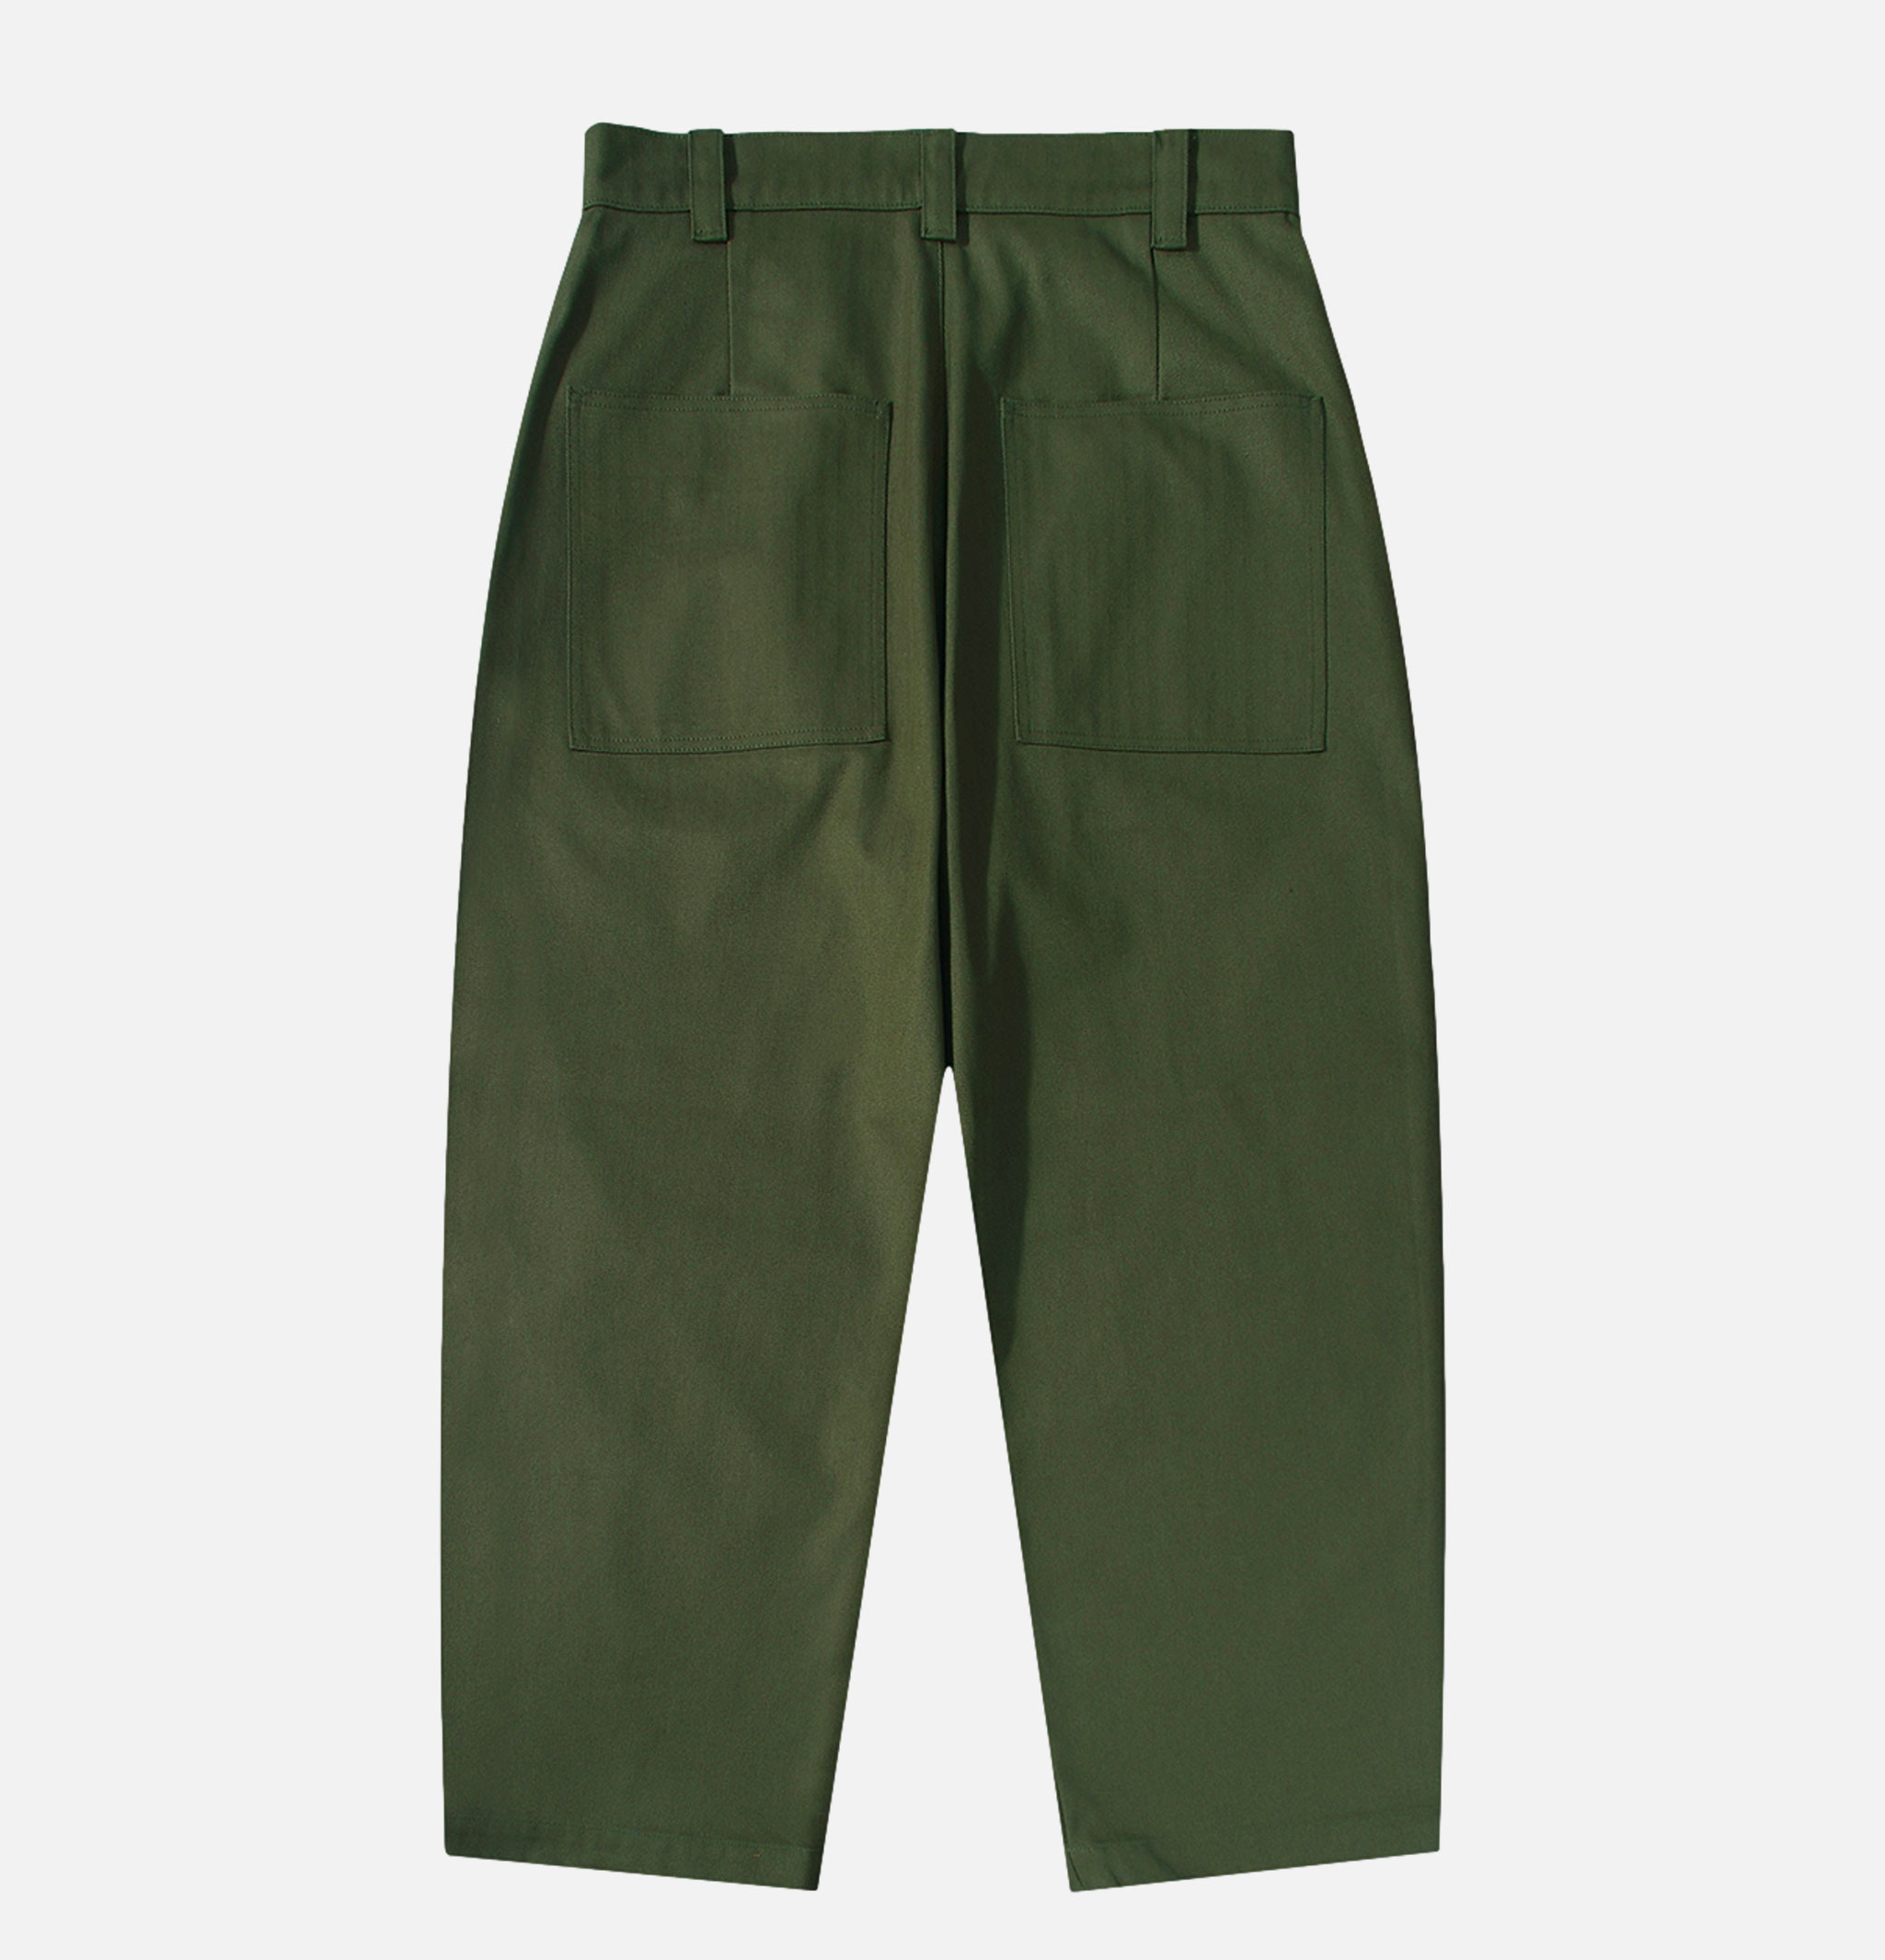 Standard Types Naval Button Pants Green